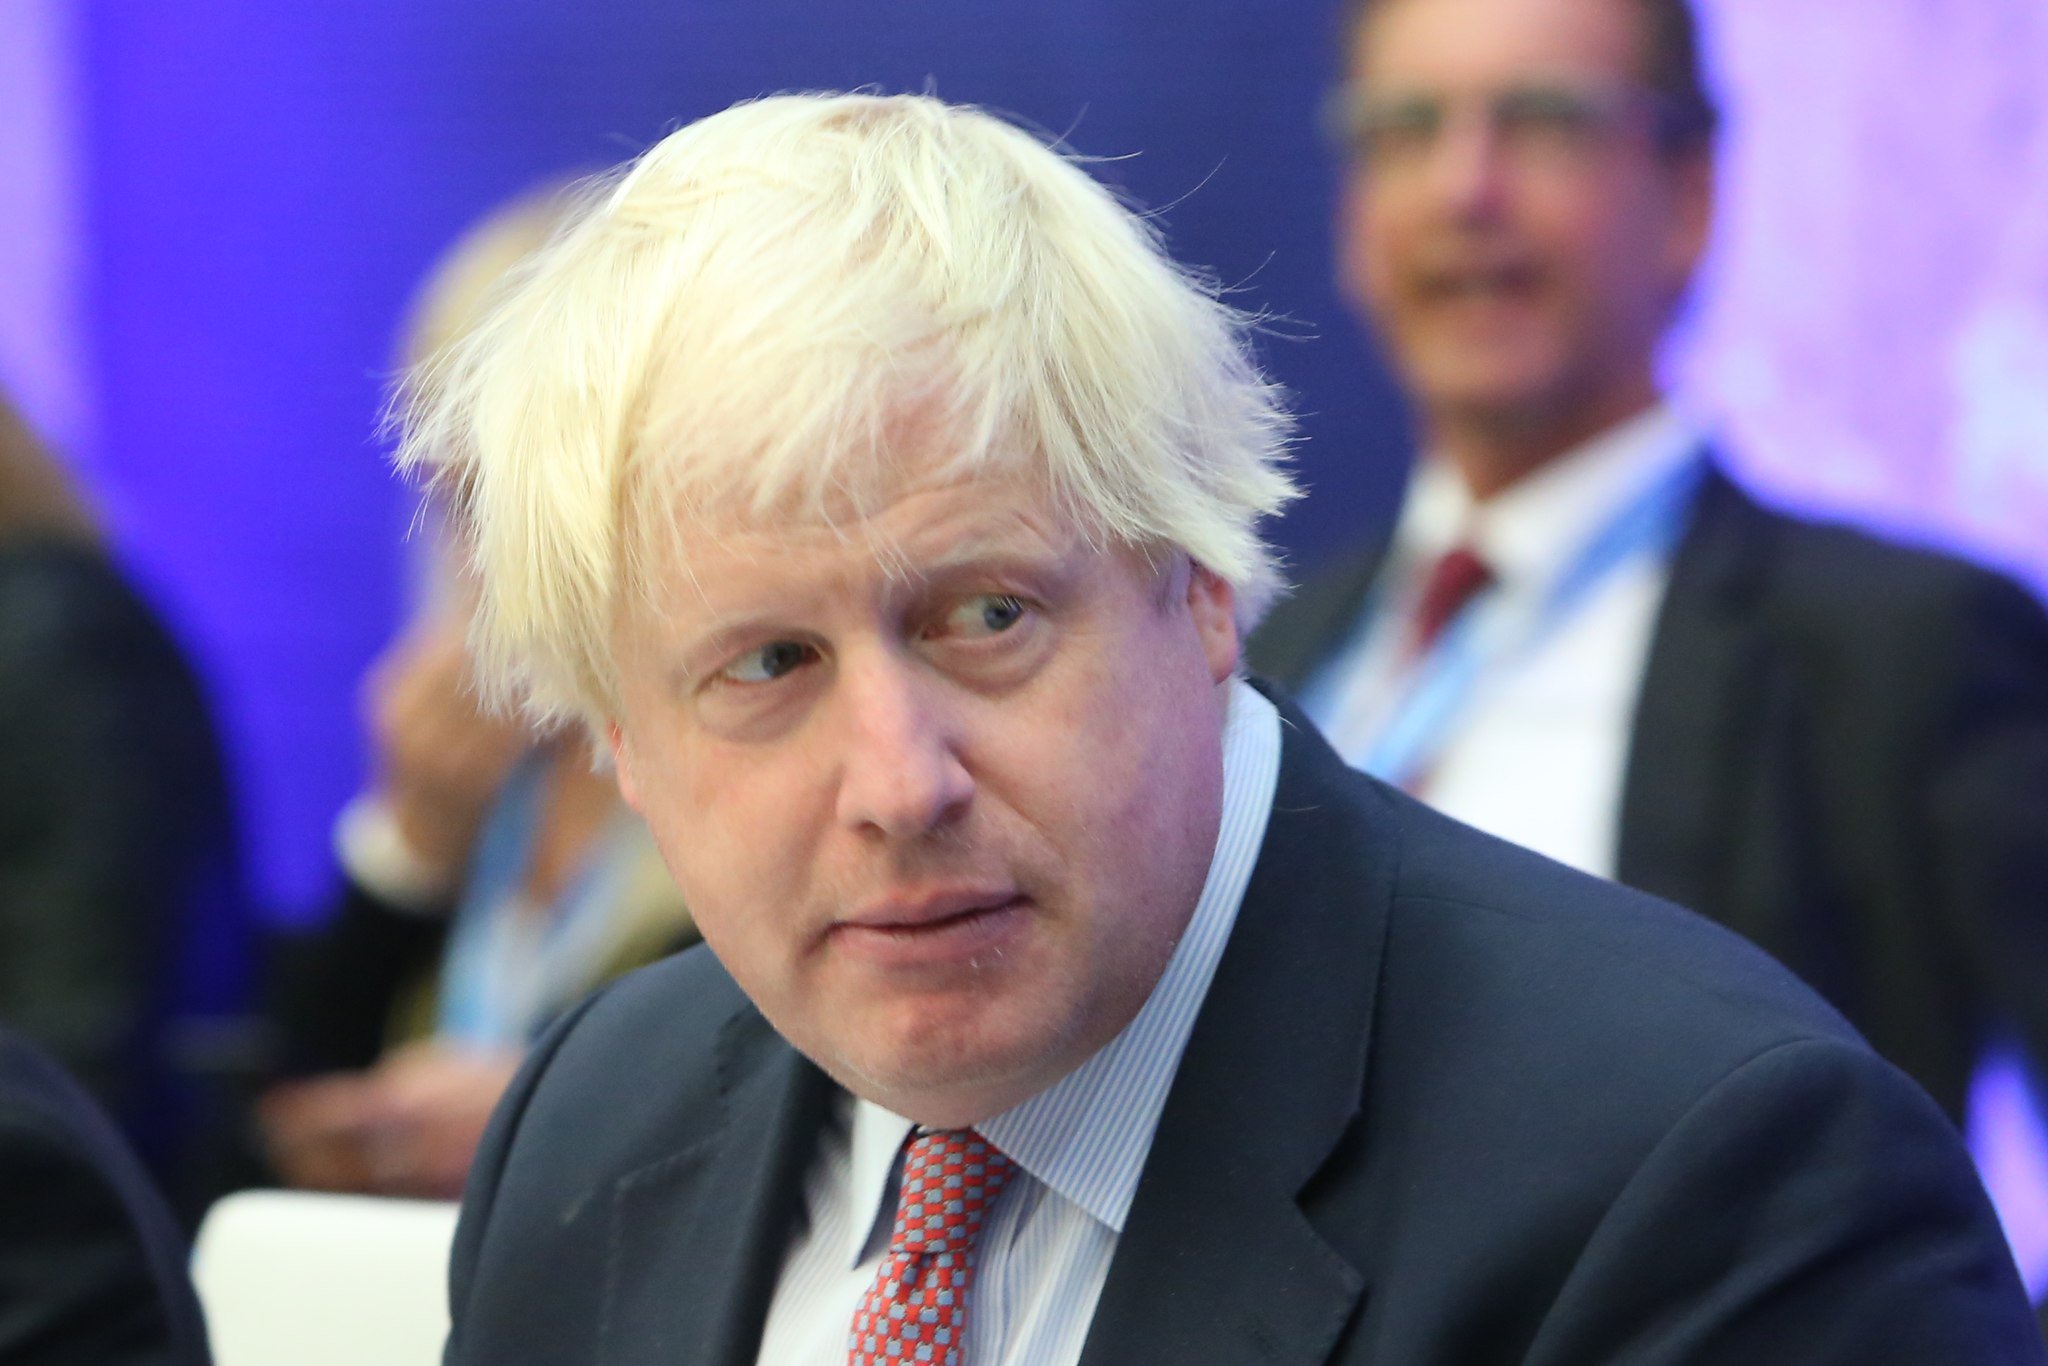 Boris Johnson looks perplexed in a close-up.